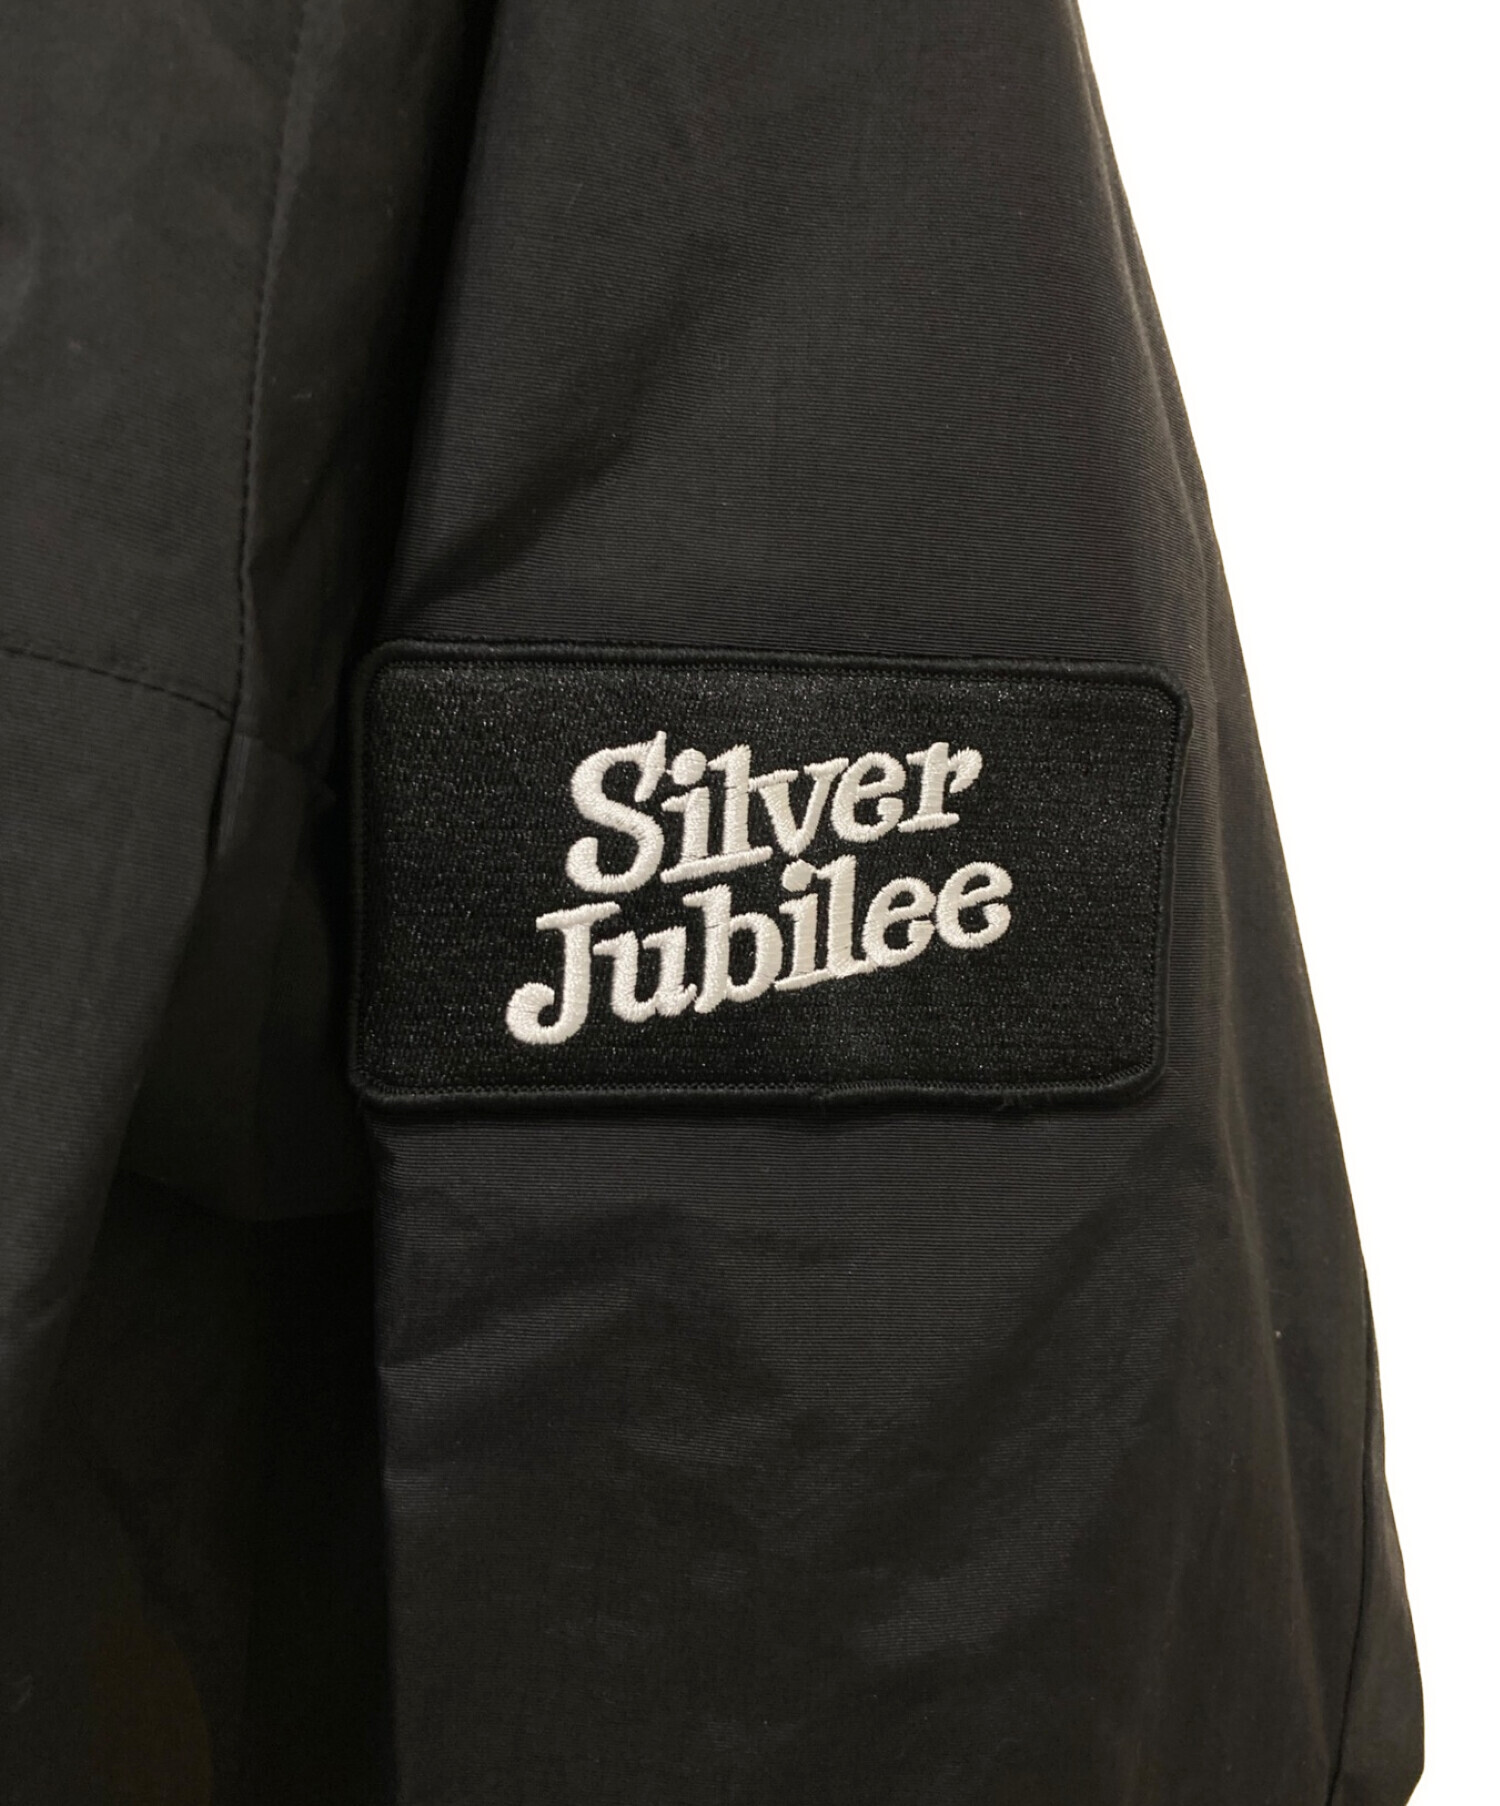 BUMP OF CHICKEN (バンプオブチキン) Silver Jubilee Jacket ブラック サイズ:XLARGE